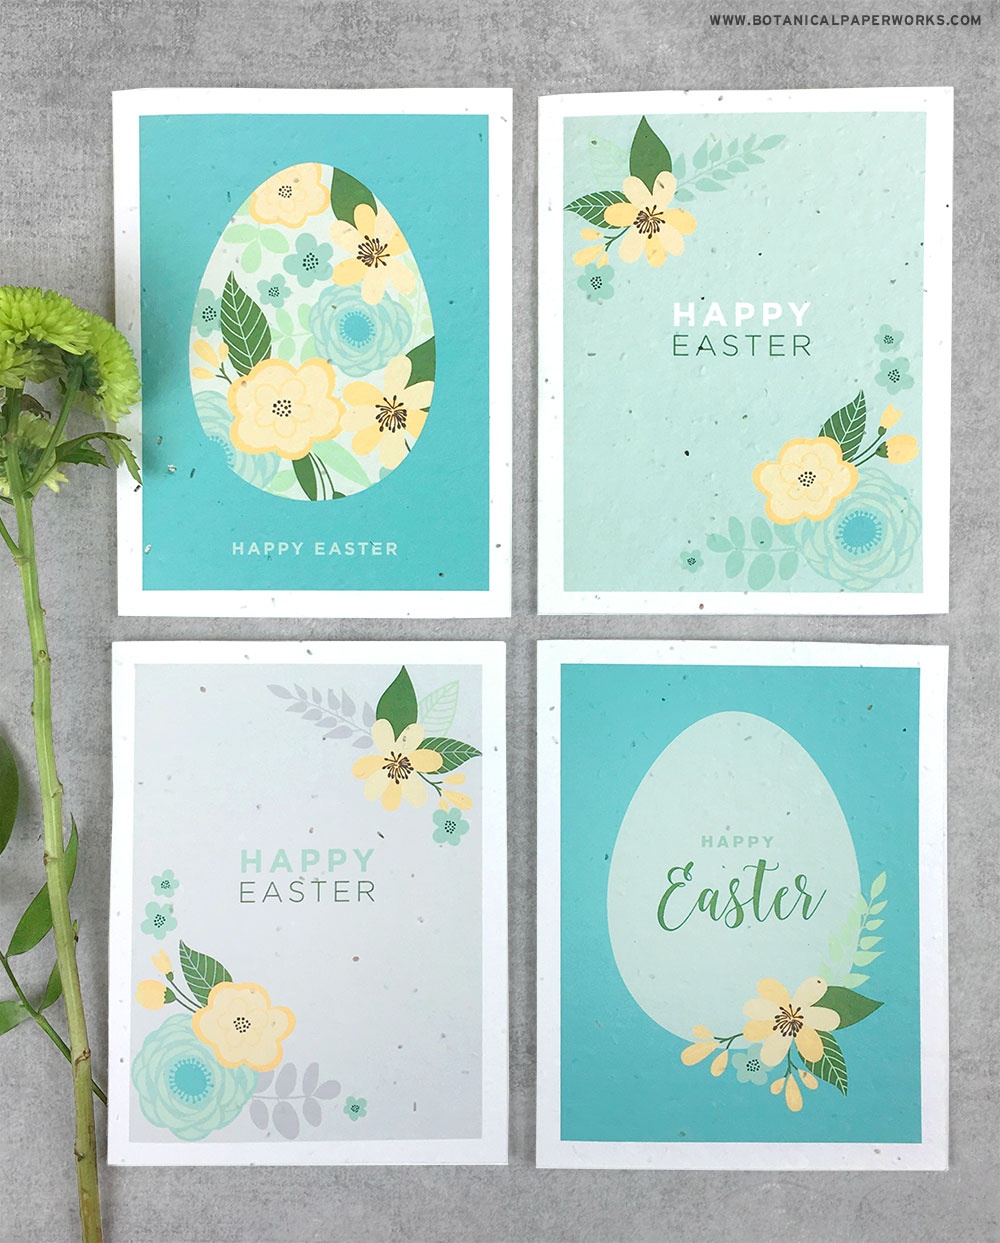 Free Printable} Easter Cards | Blog | Botanical Paperworks - Free Printable Easter Cards